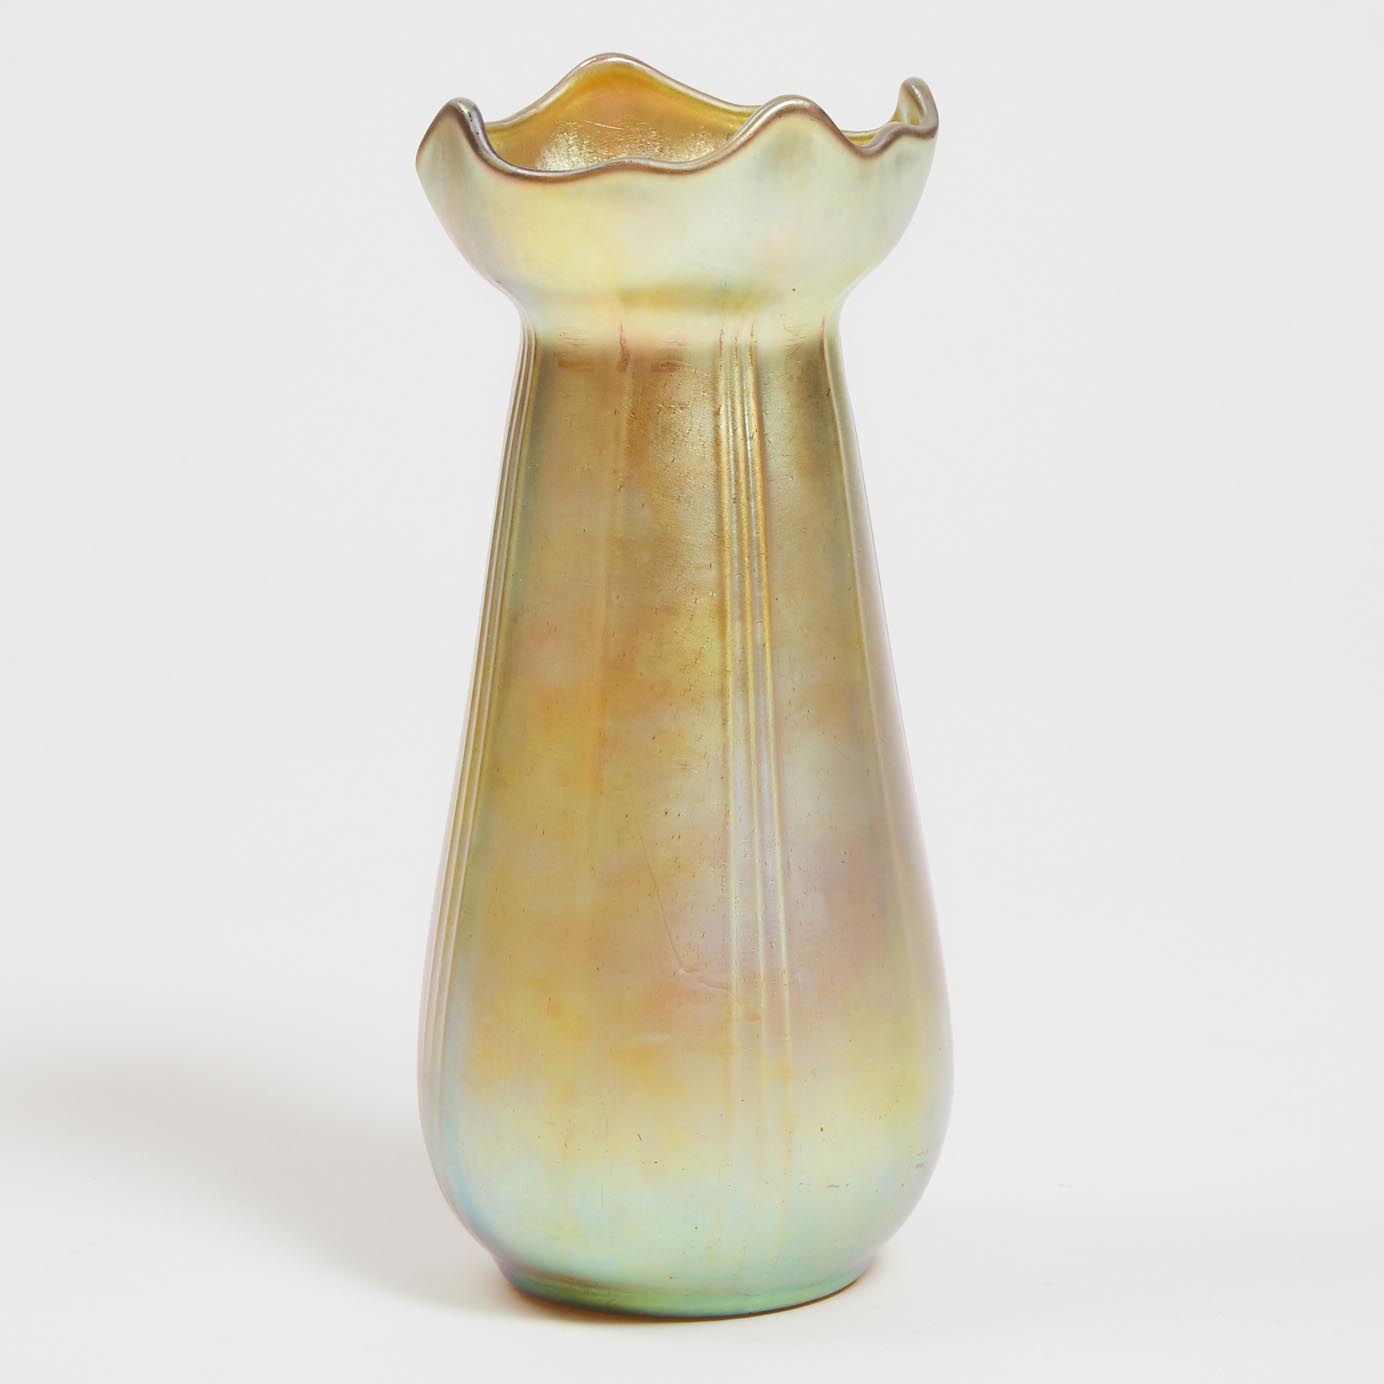 Steuben ‘Aurene’ Iridescent Gold Glass Vase, early 20th century